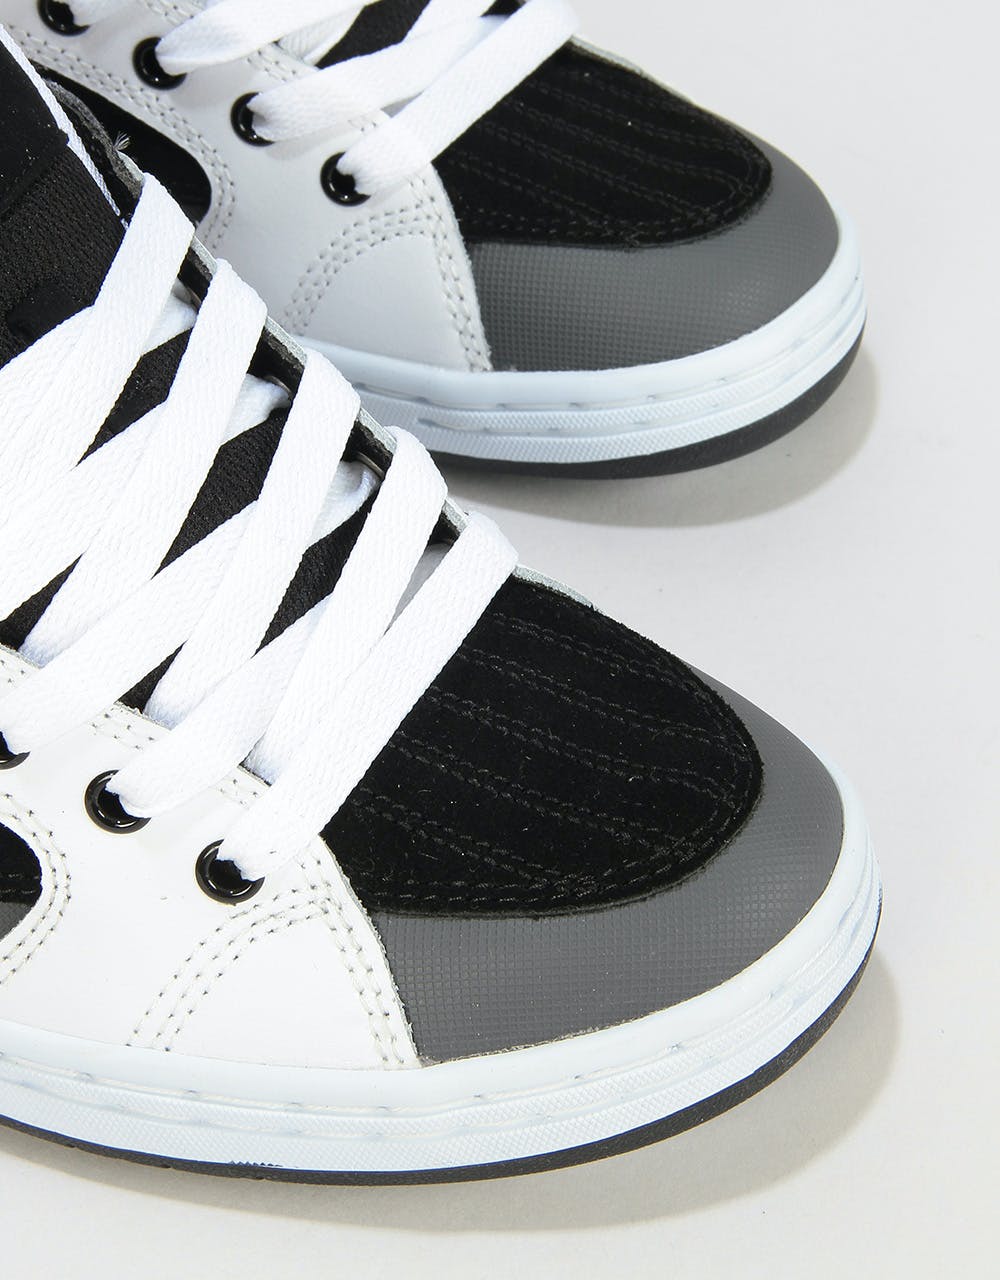 Etnies Czar Skate Shoes - White/Black/Grey